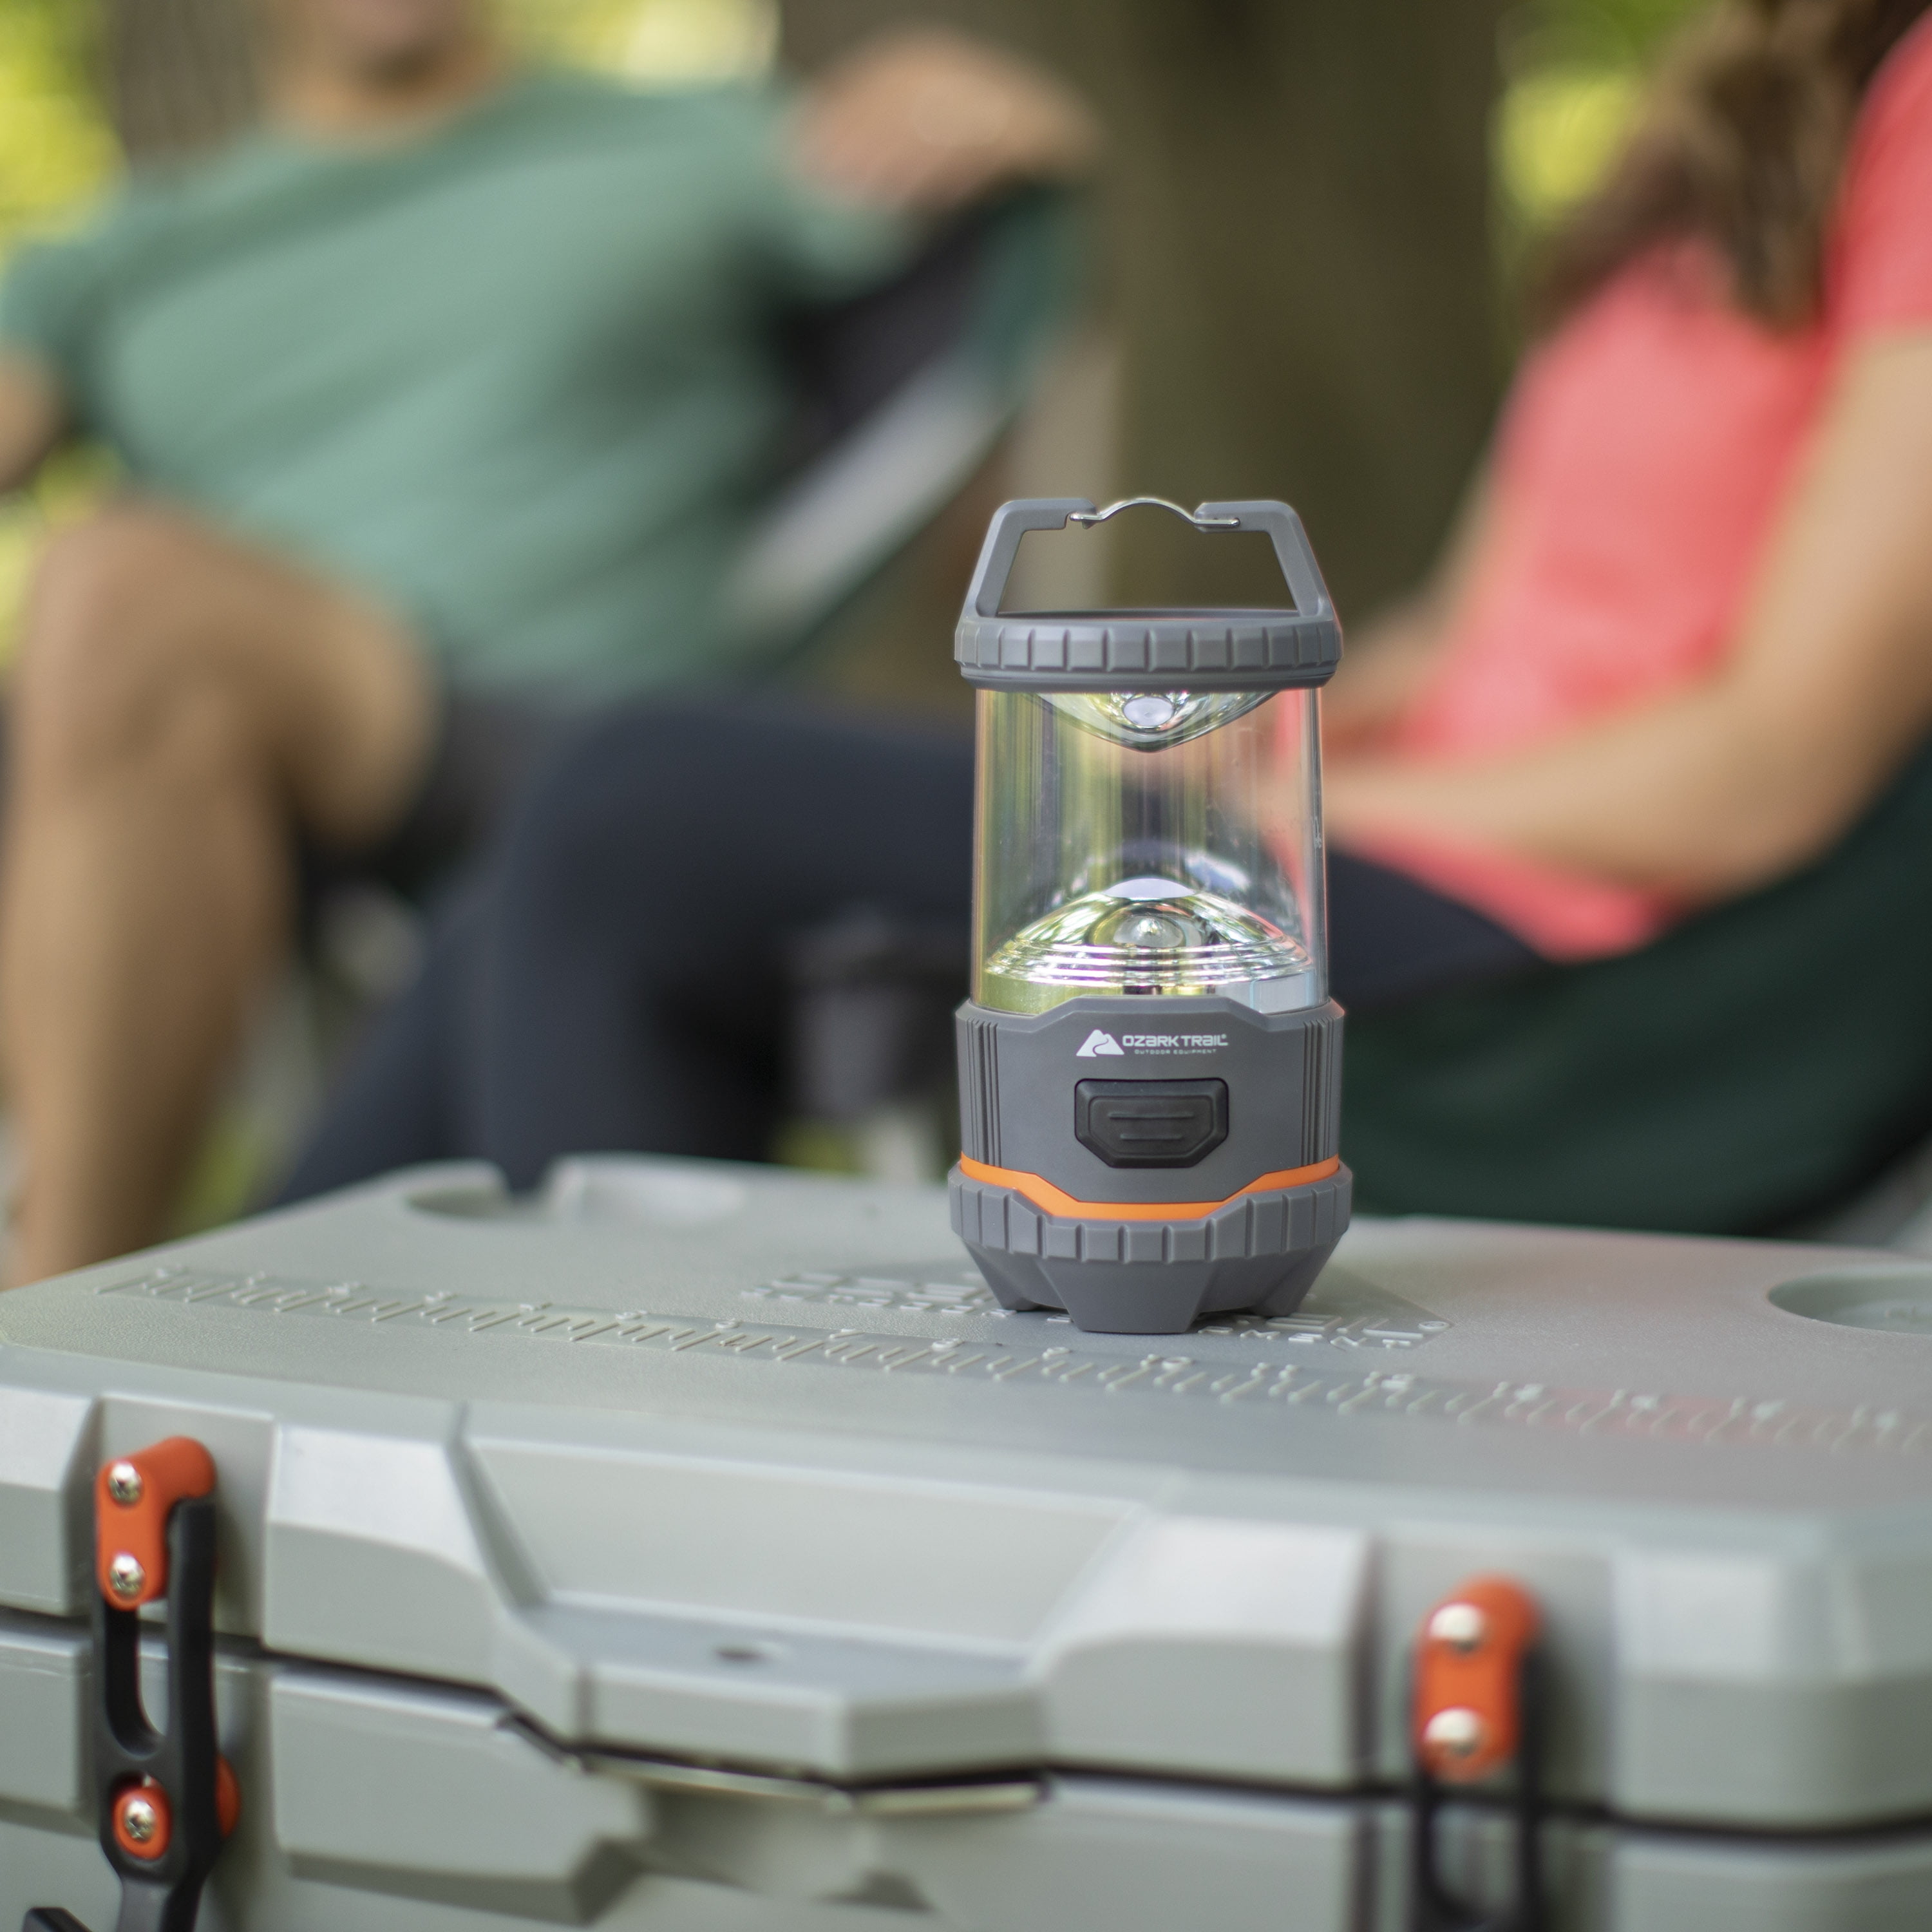 Ozark Trail Lantern Indoor Outdoor Floating Camping Light Weather Resistant